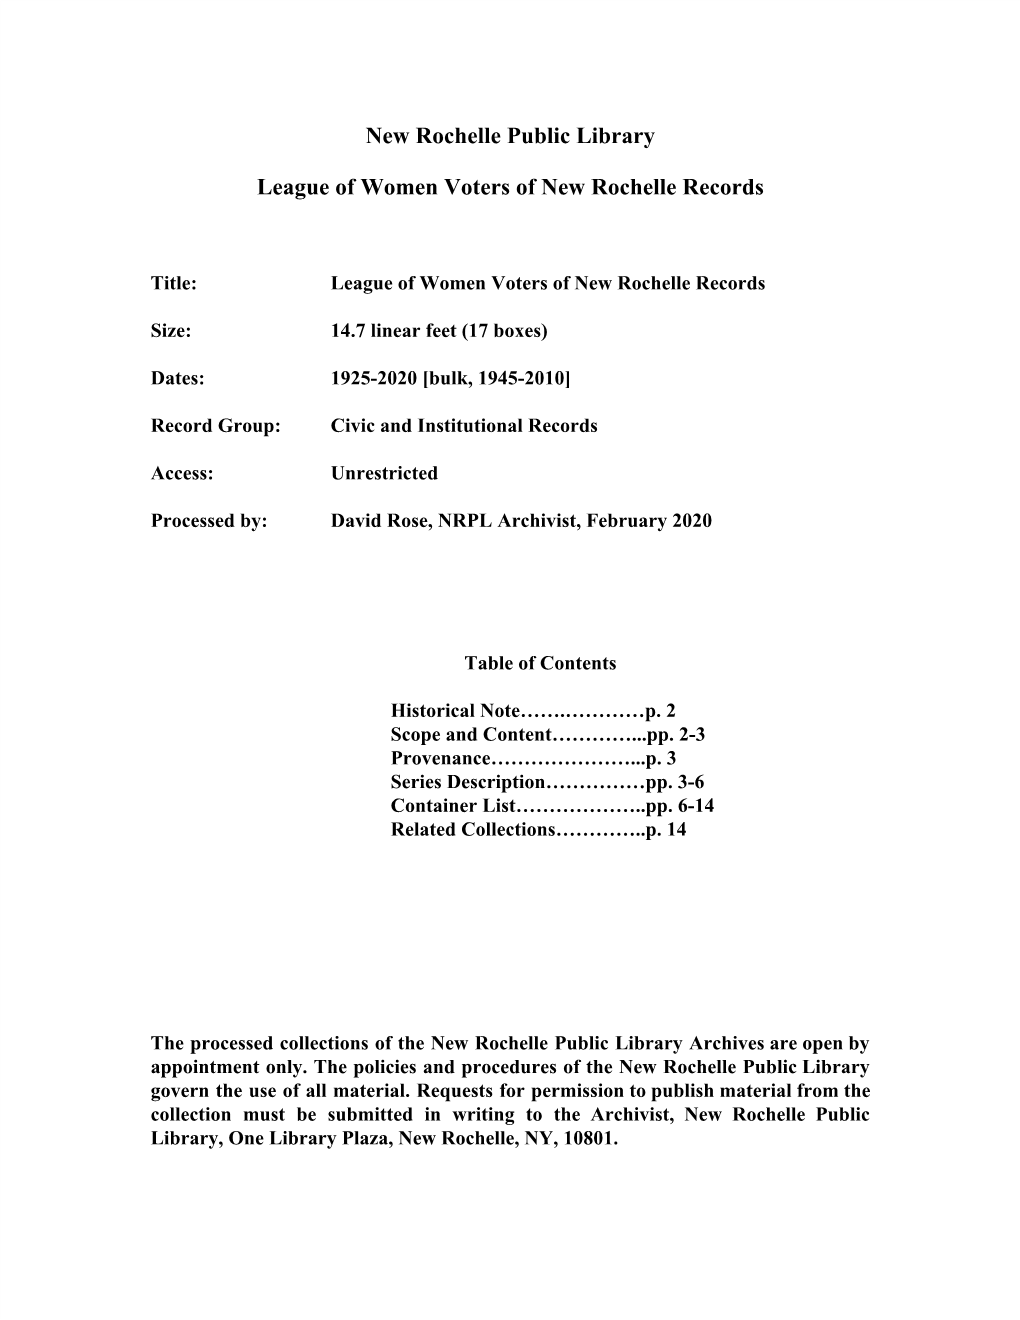 New Rochelle Public Library League of Women Voters of New Rochelle